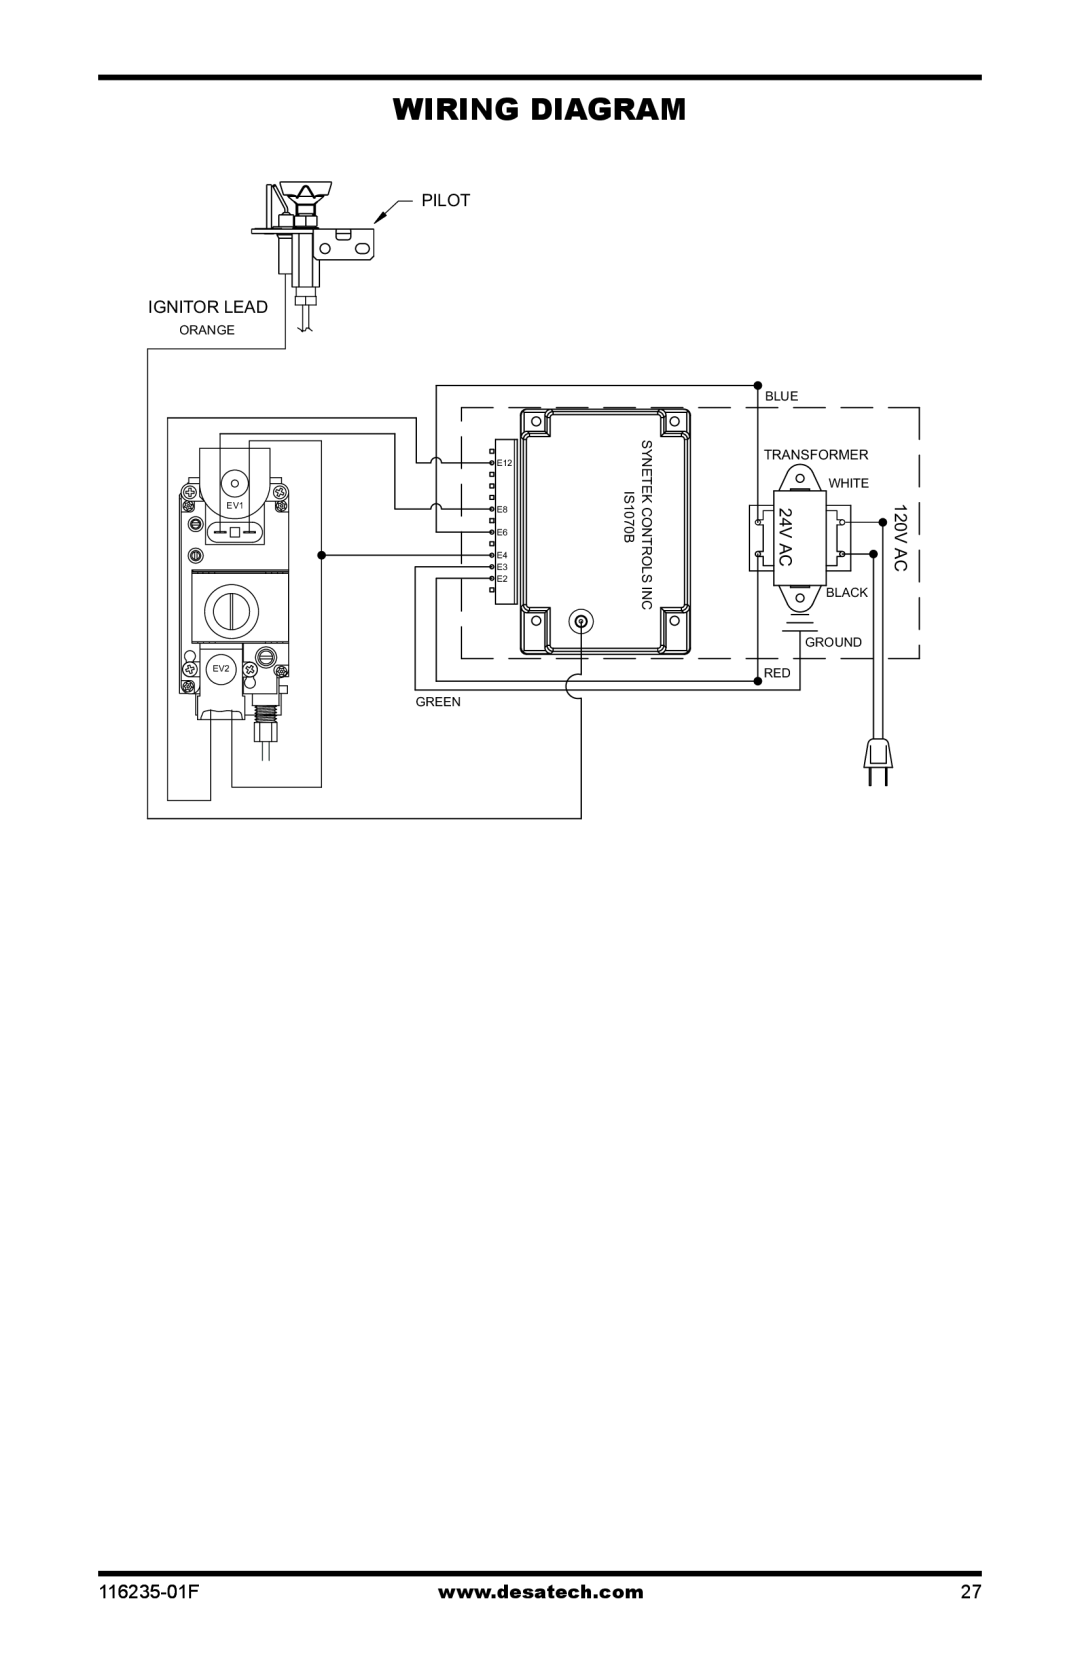 Desa (V)VC36PE Series installation manual Wiring Diagram, 116235-01F, Ignitor Lead, Pilot, 24V AC, 120V AC, IS1070B 